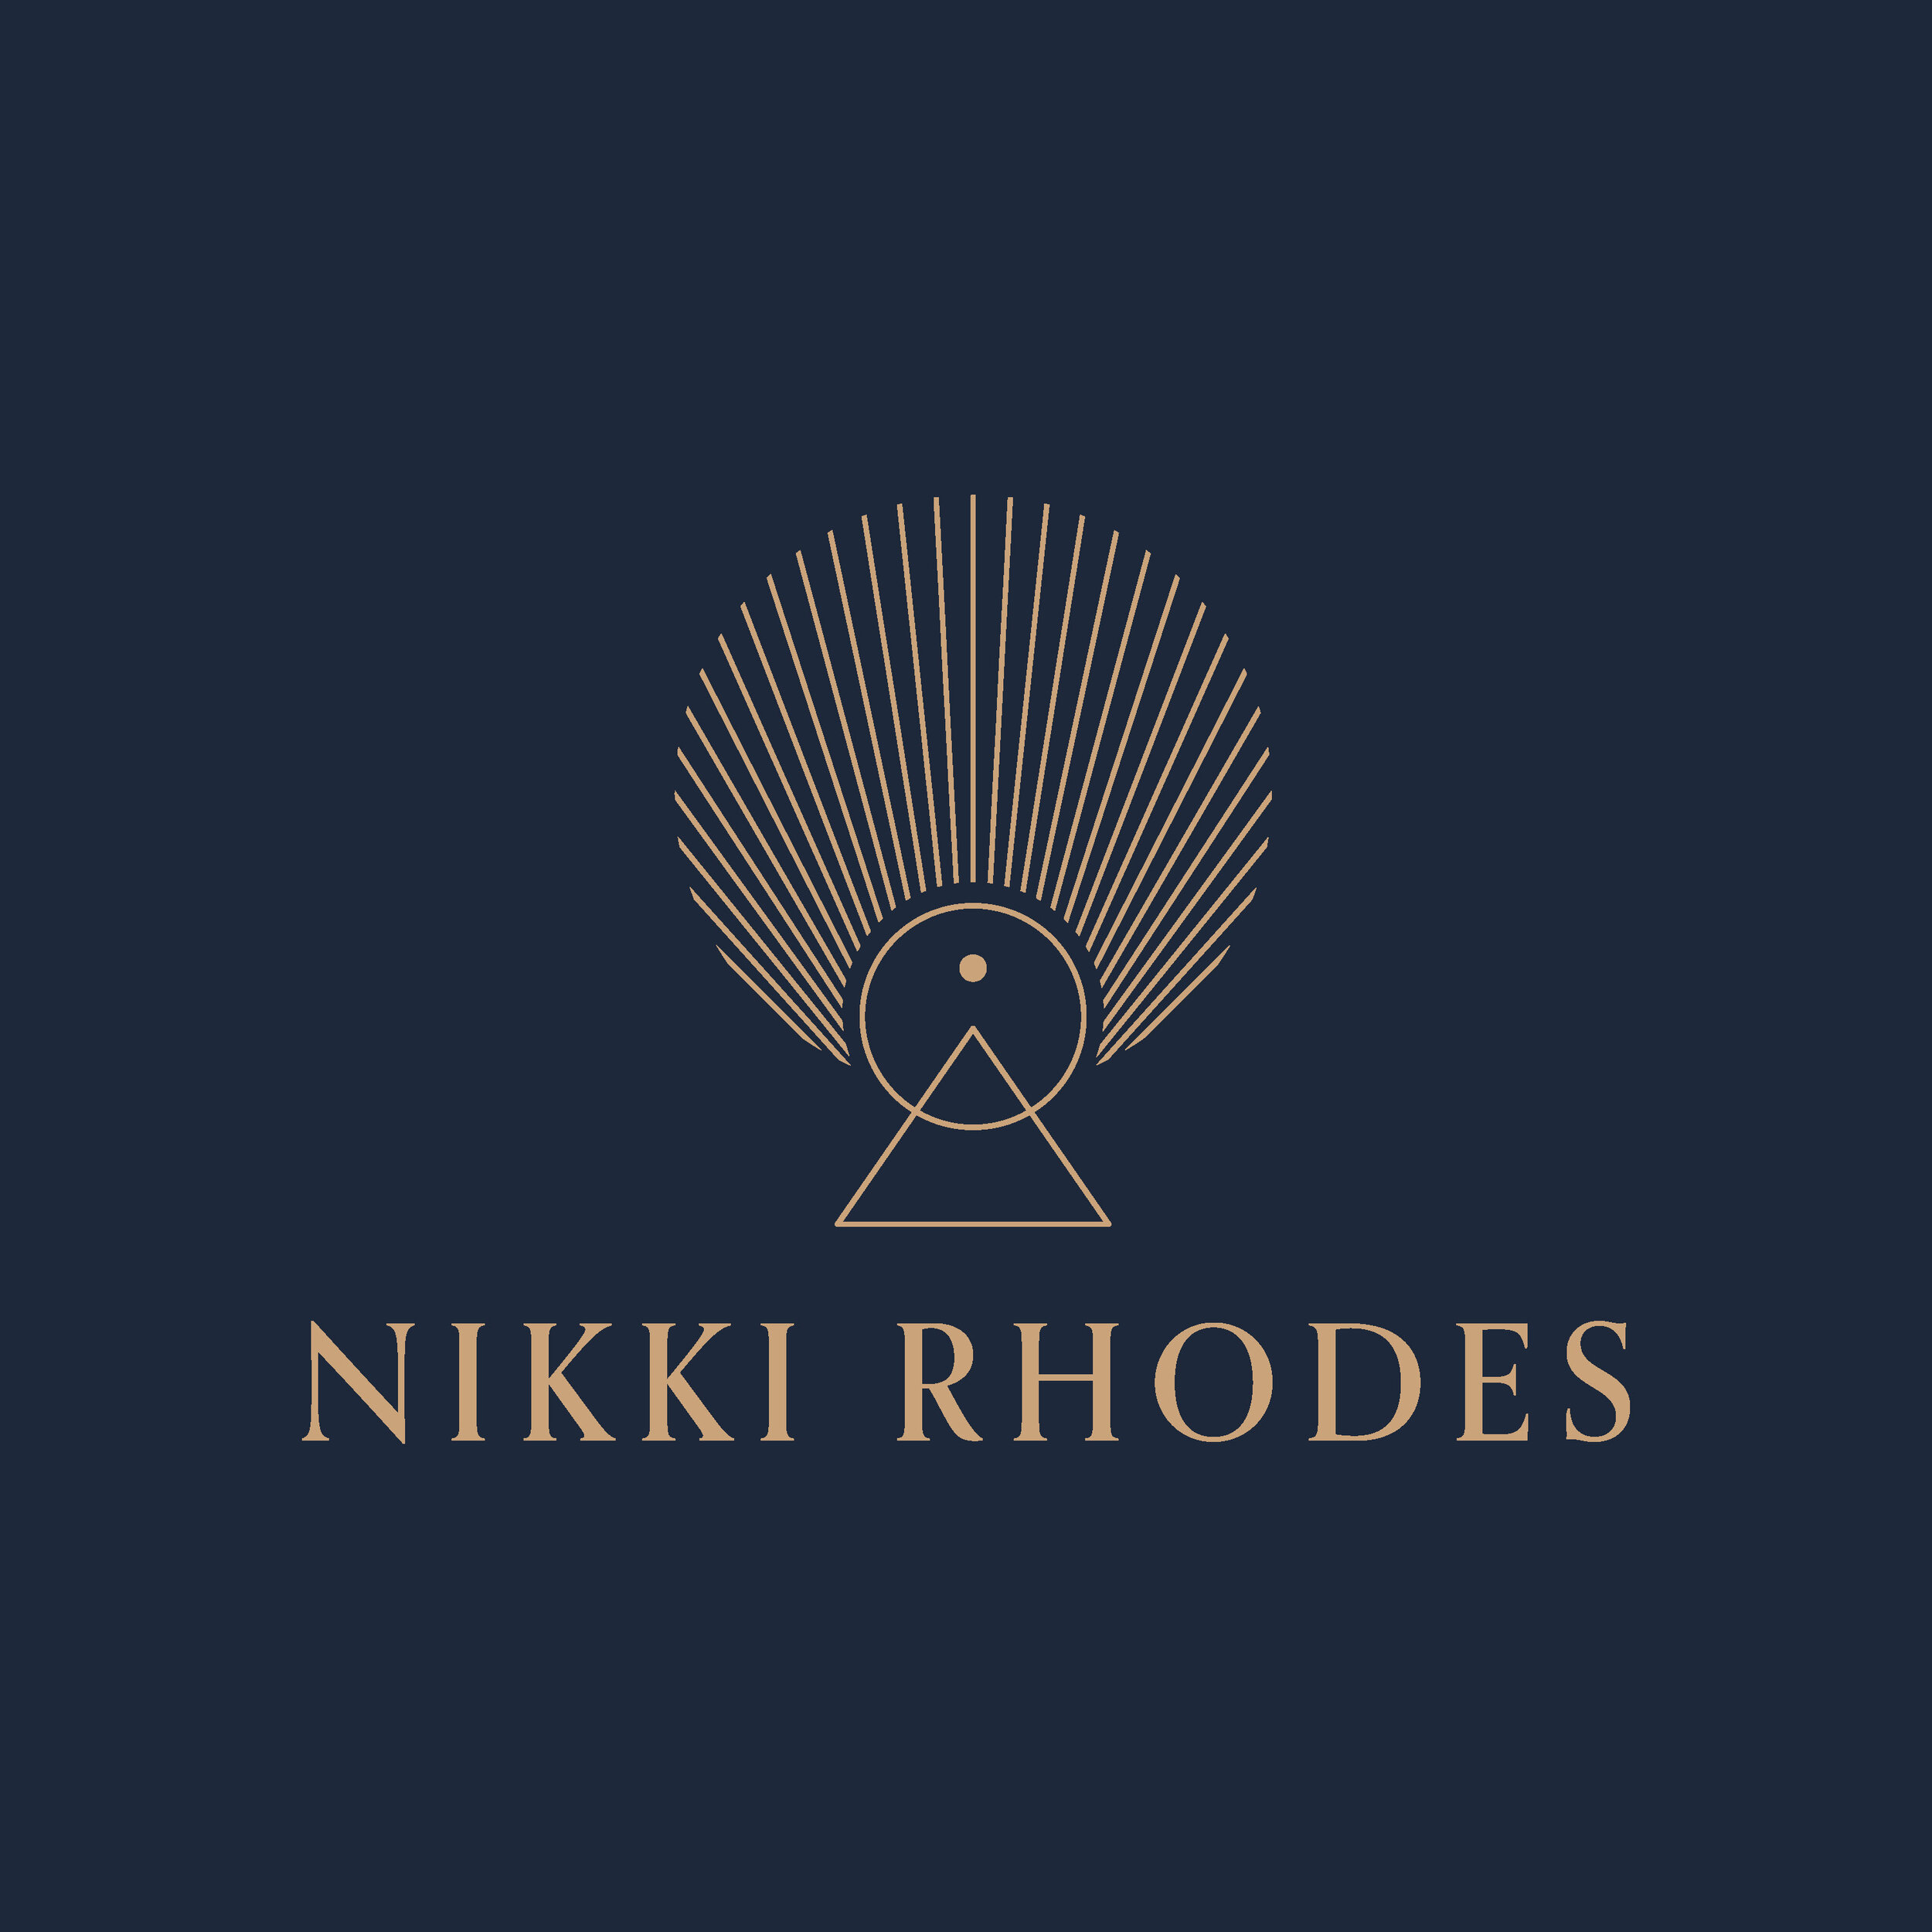 NikkiRhodes_Logo design_LuminovaDesign.jpg